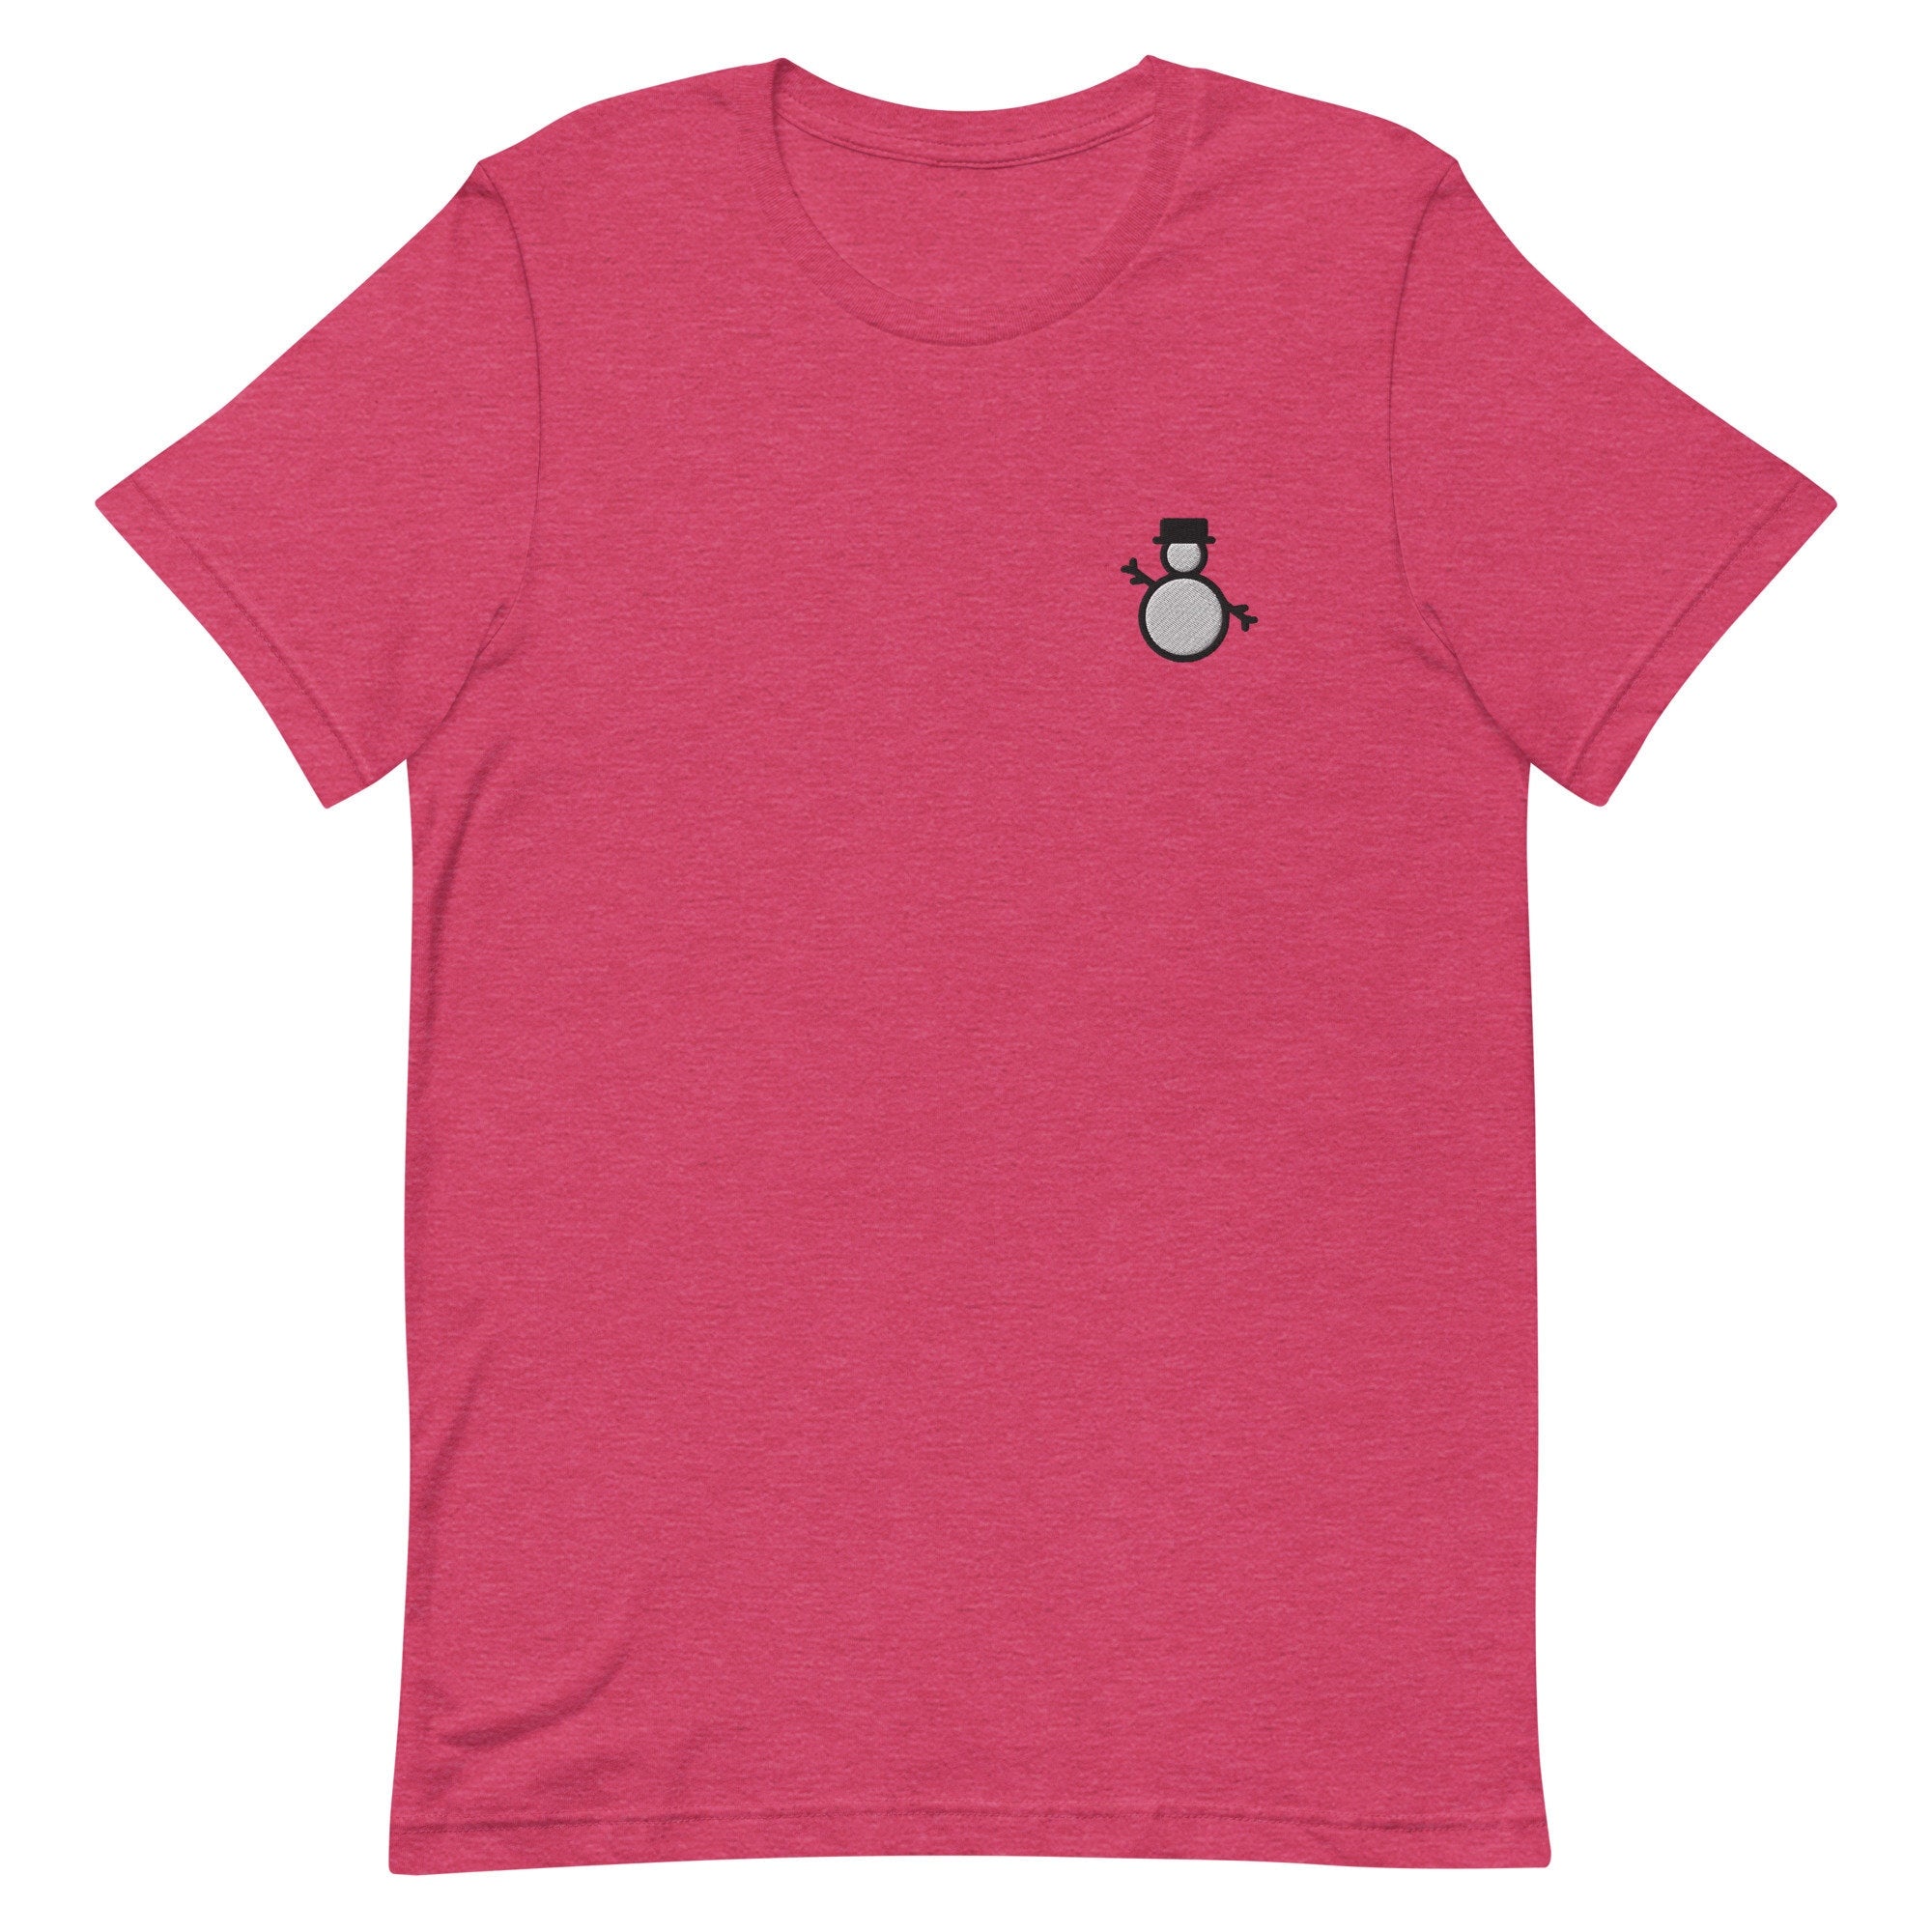 Snowman Premium Men's T-Shirt, Embroidered Men's T-Shirt Gift for Boyfriend, Men's Short Sleeve Shirt - Multiple Colors